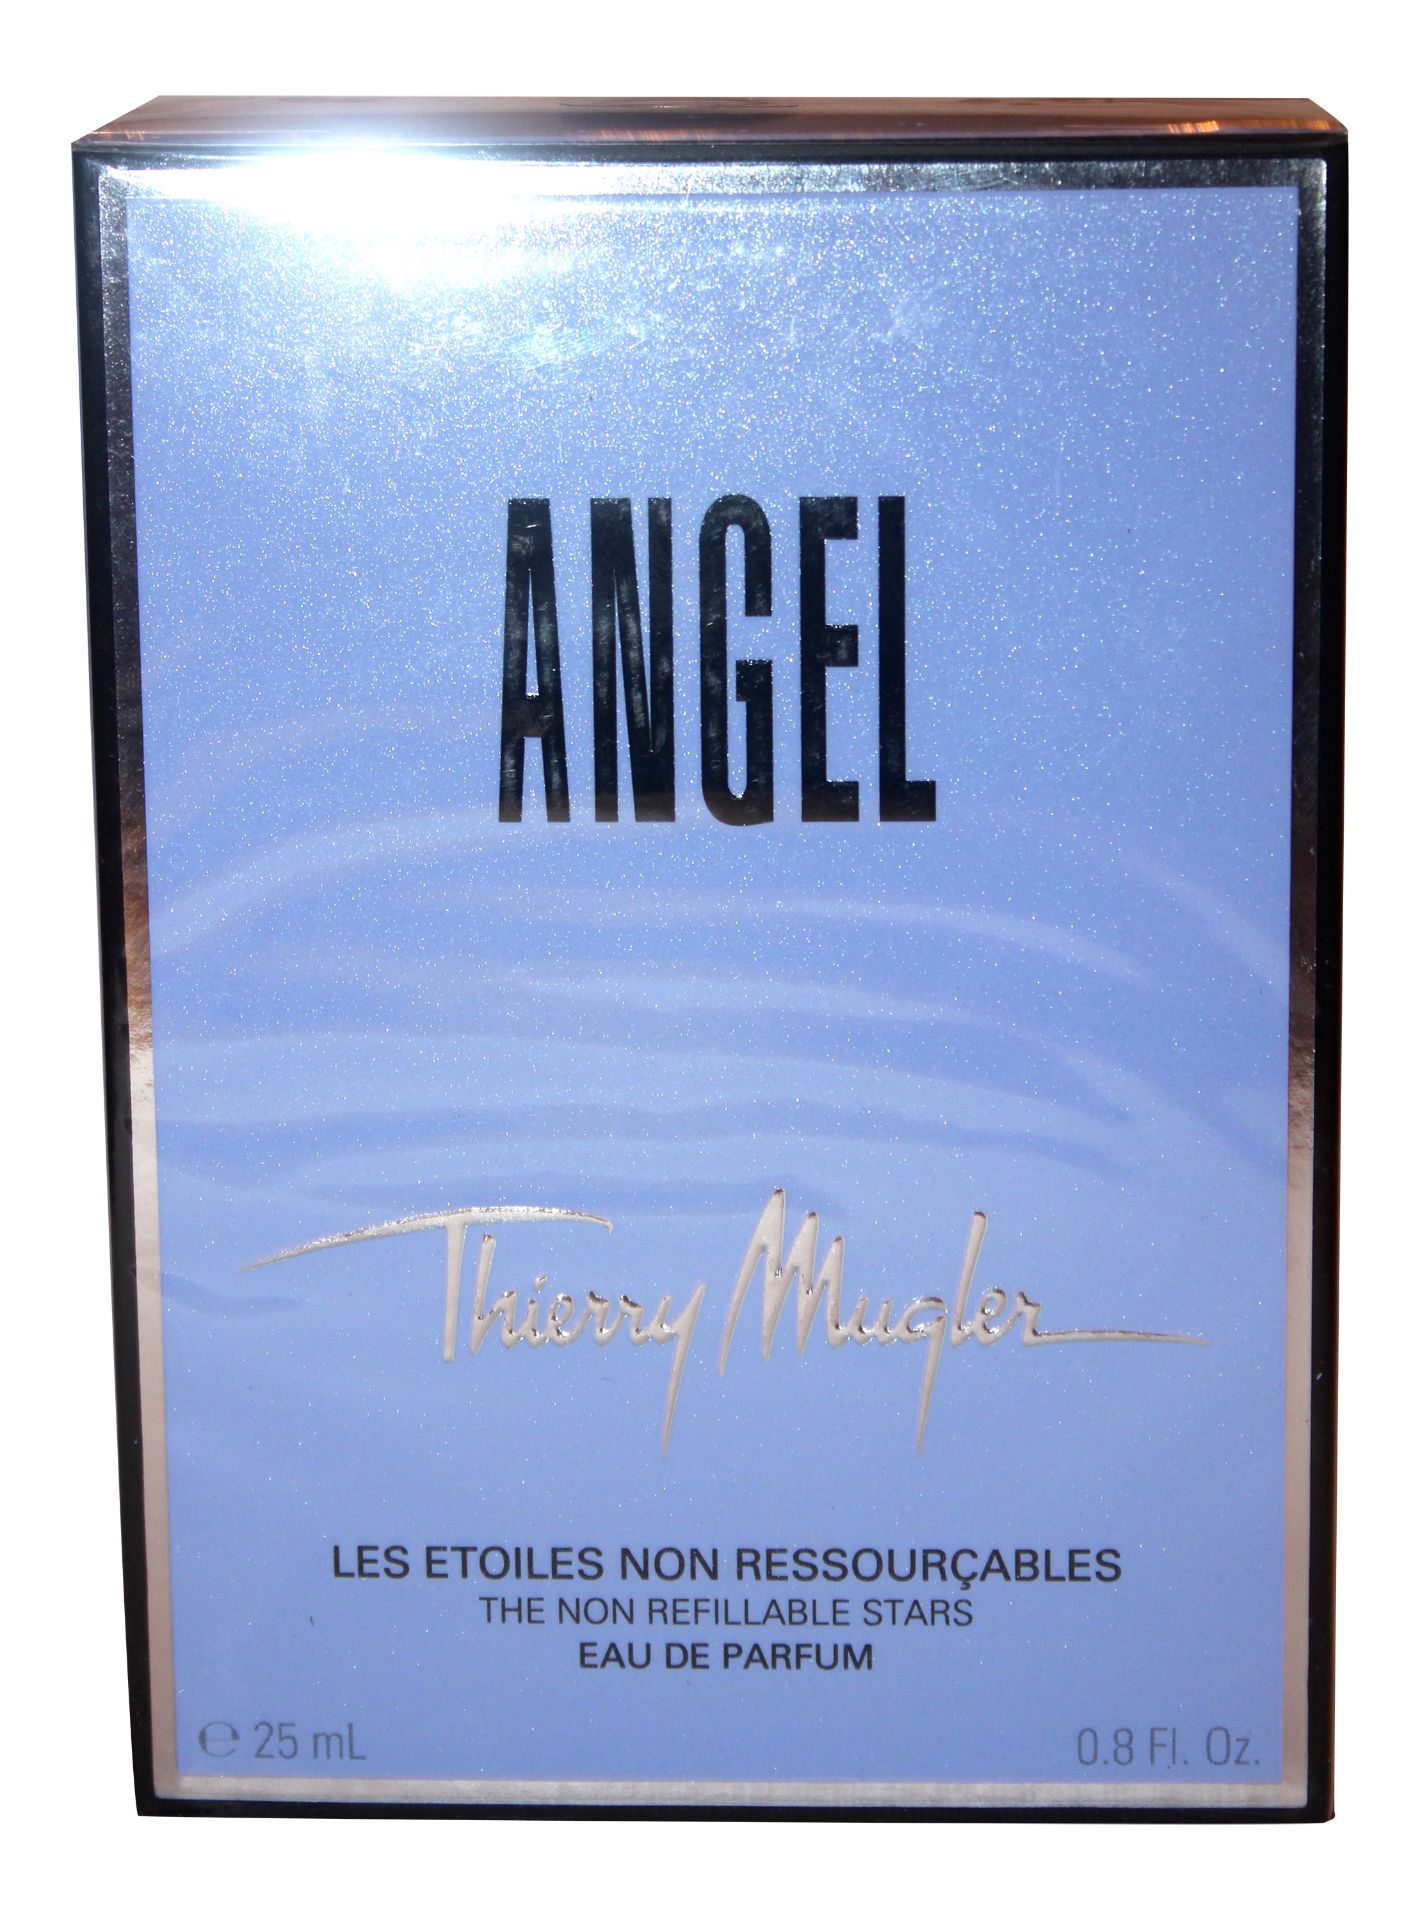 Thierry Mugler Angel EDP 25ml for Women x 1 Unit - Image 3 of 3